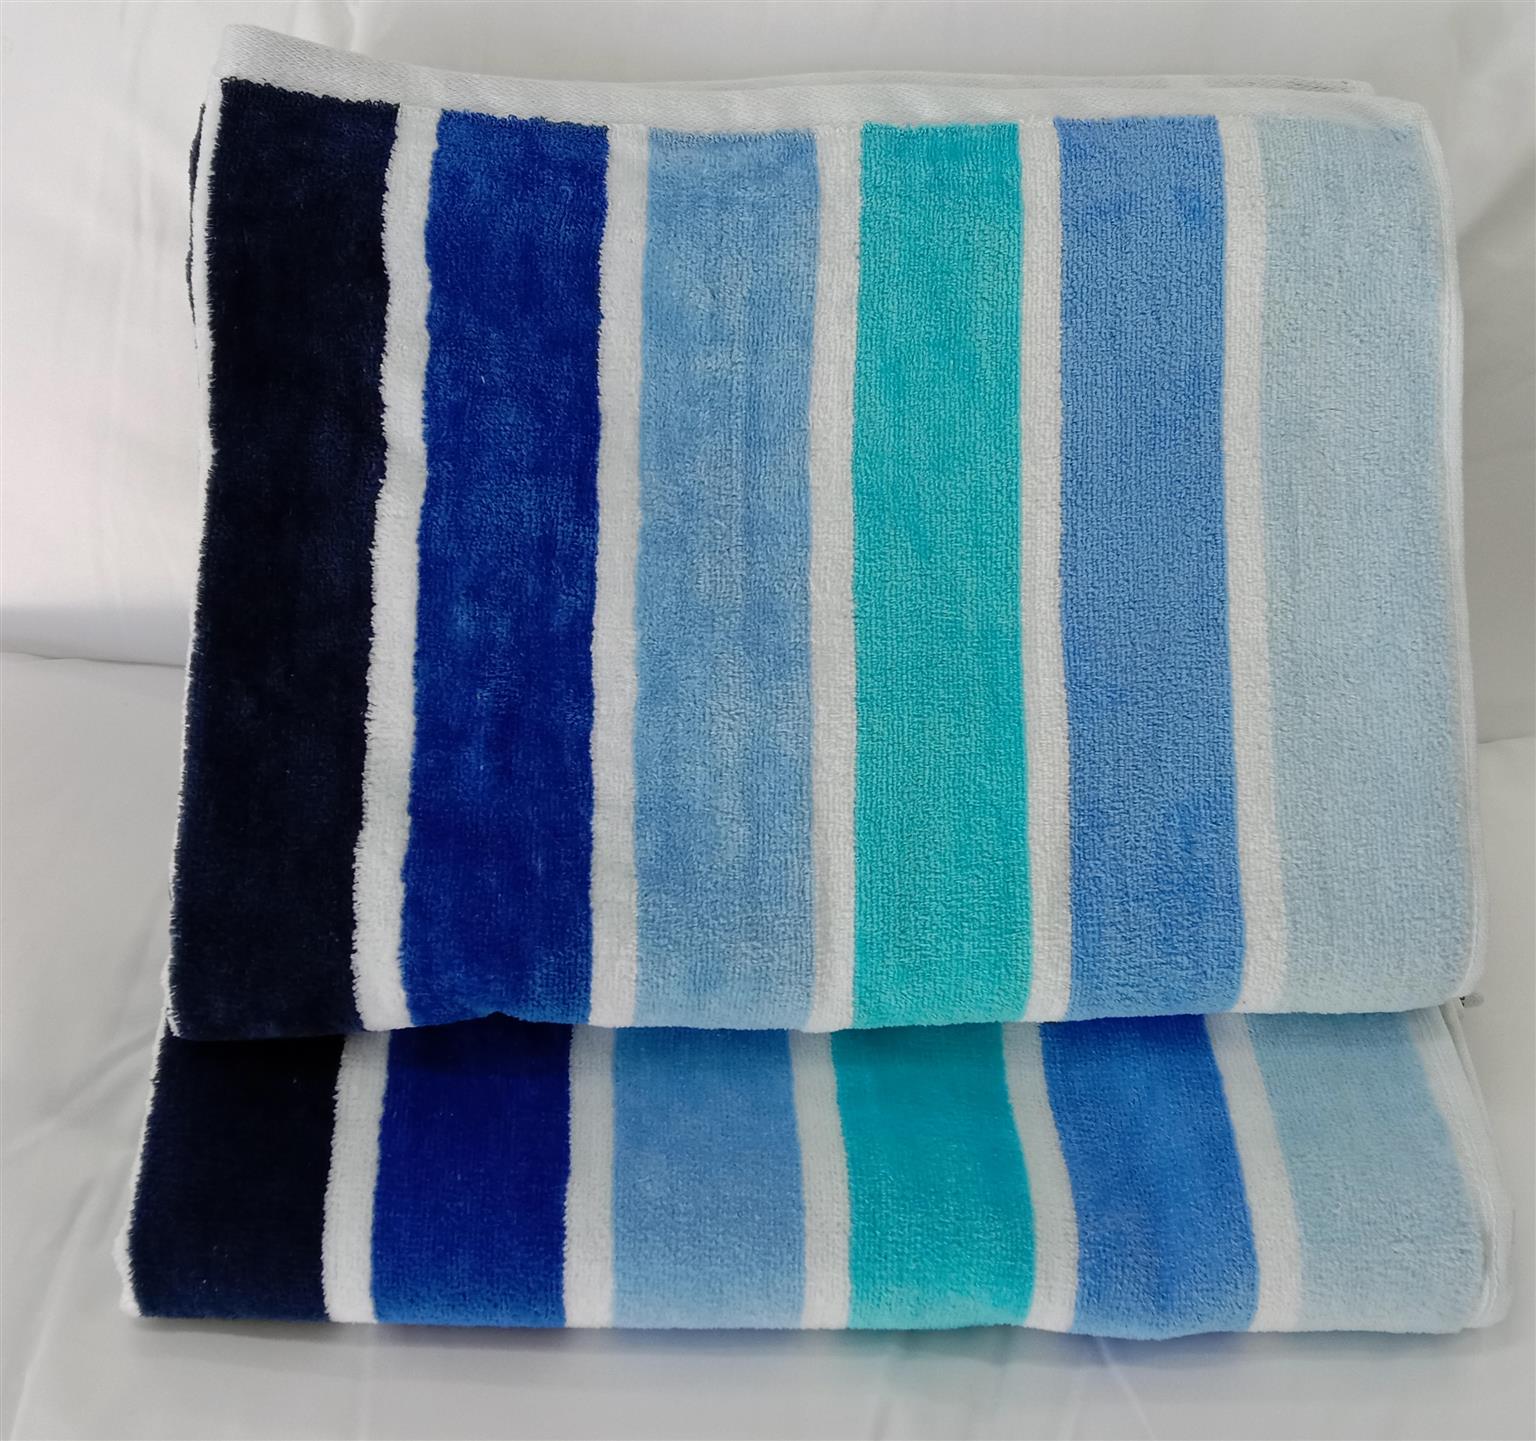 Tasneens Linen (Pty) Ltd - quality hospitality linen & towels